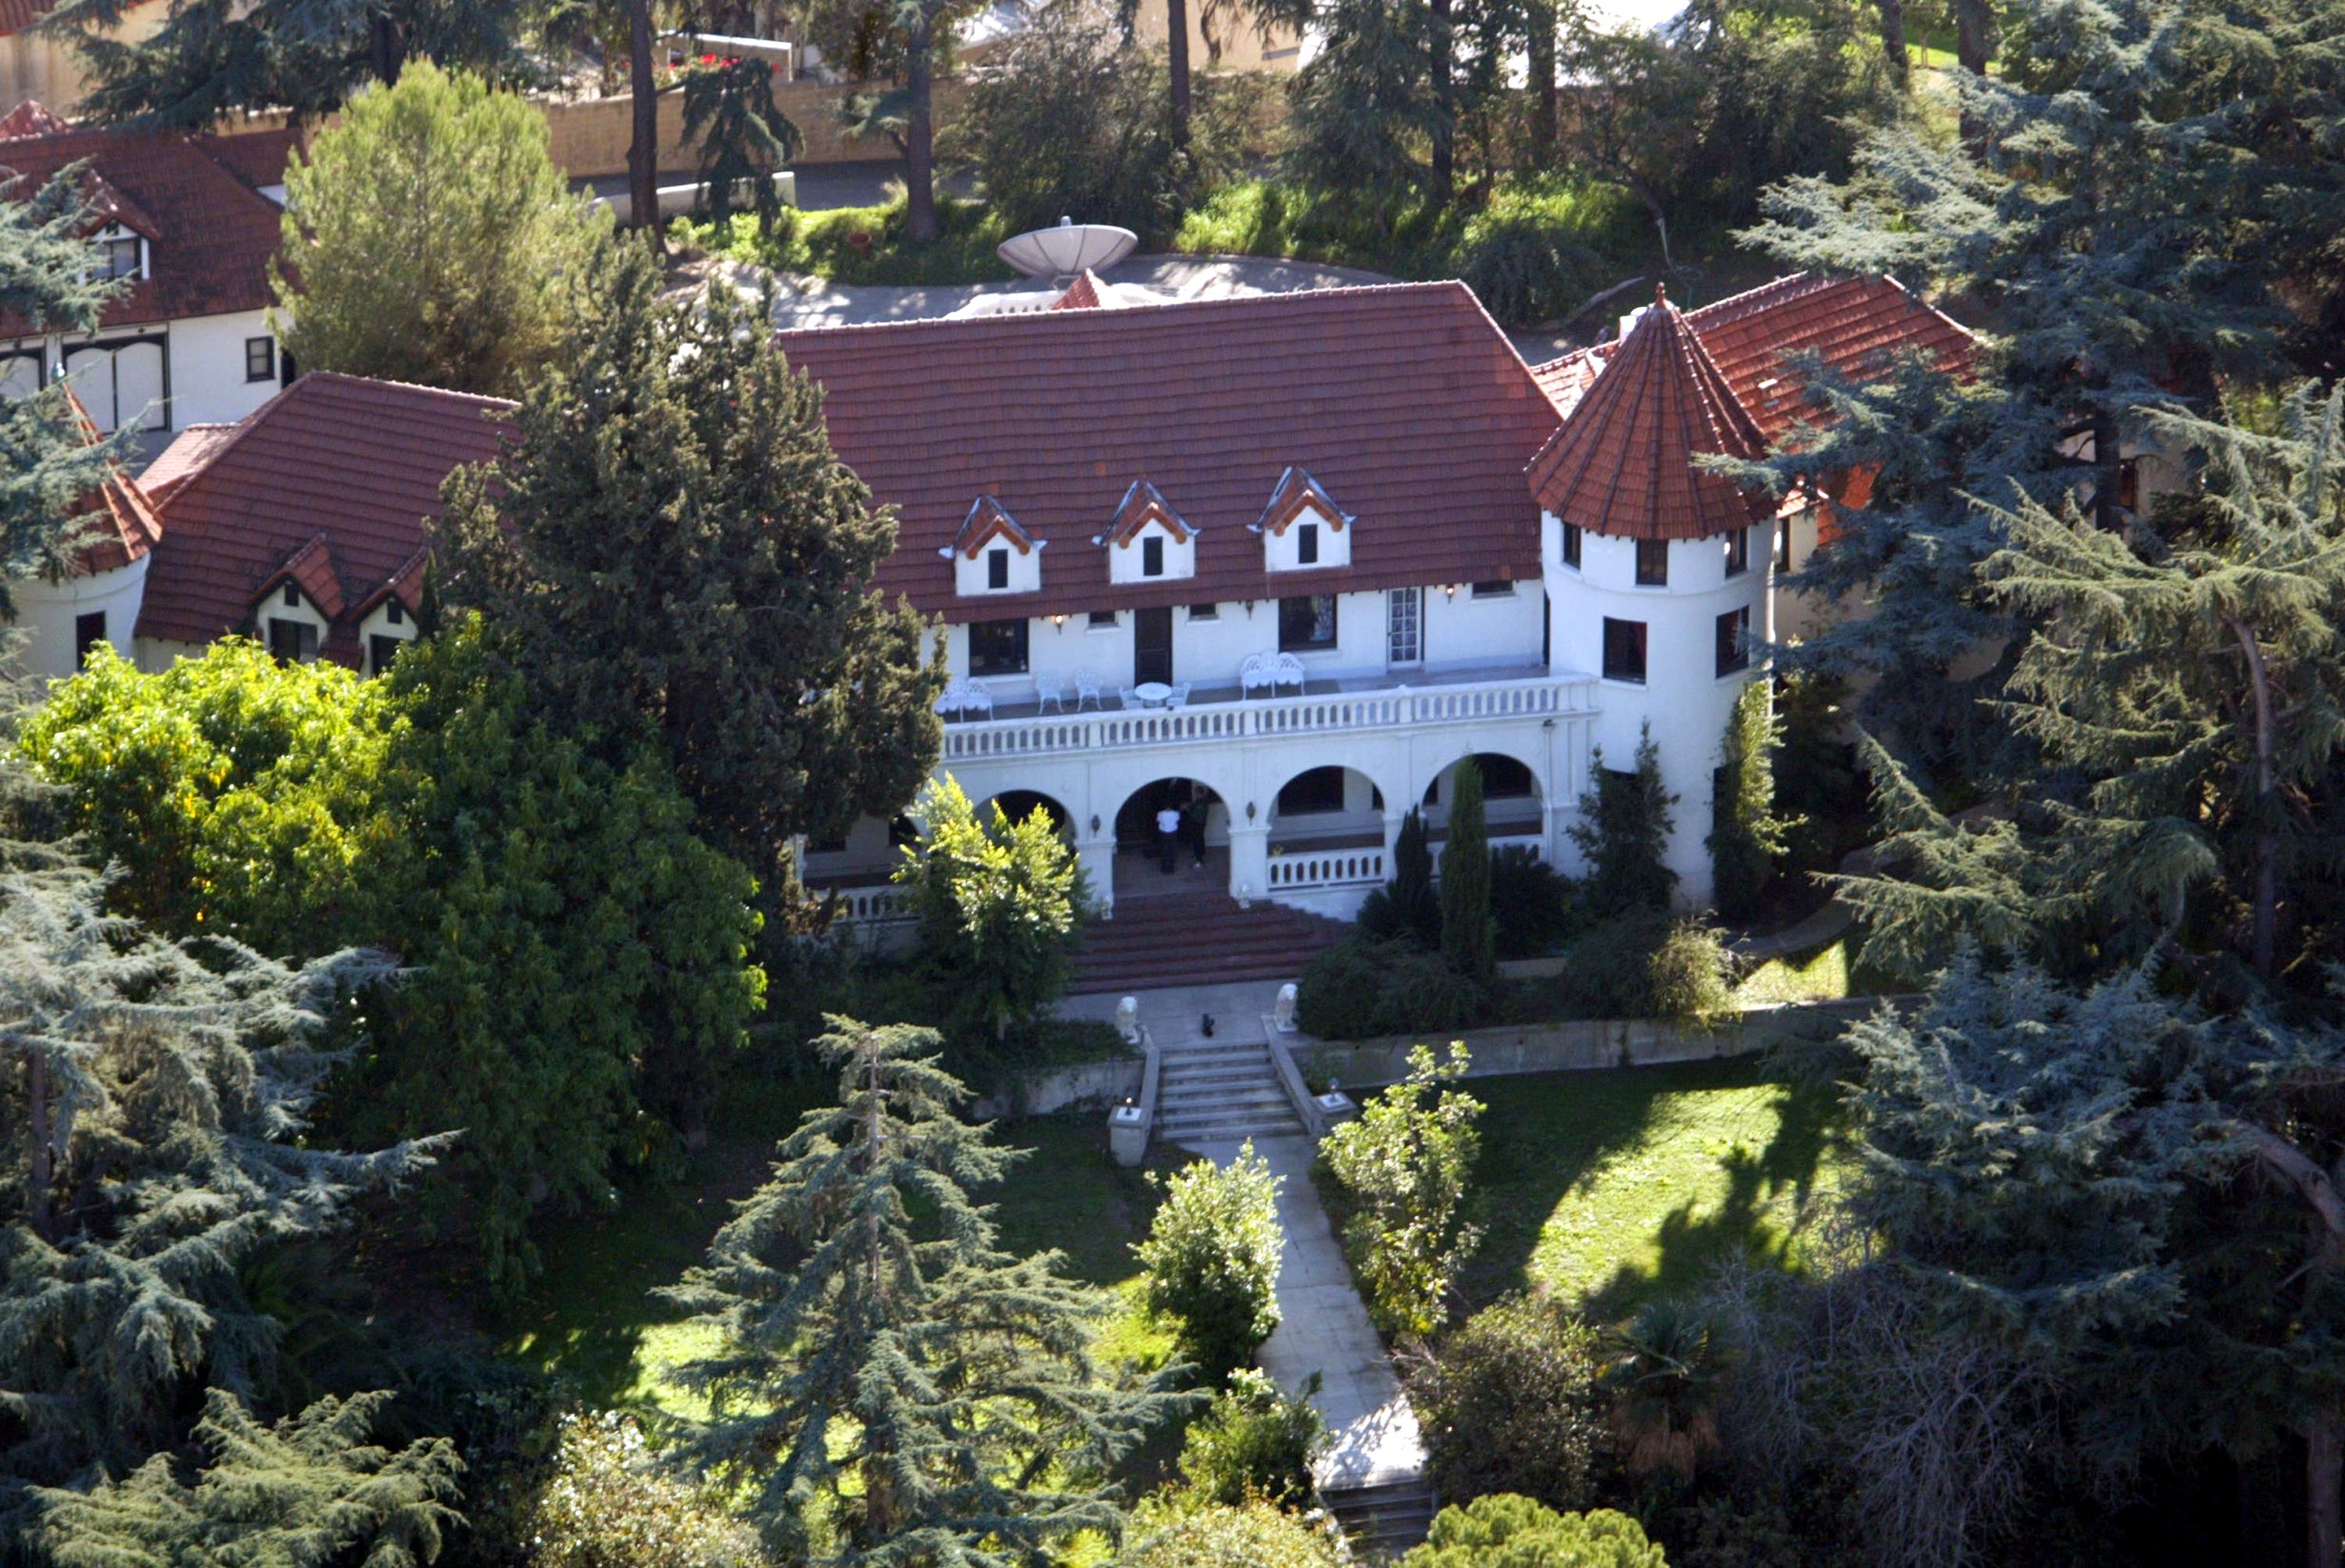 Phil Spector’s castle in Alhambra, California, where Lana Clarkson was found dead in 2003